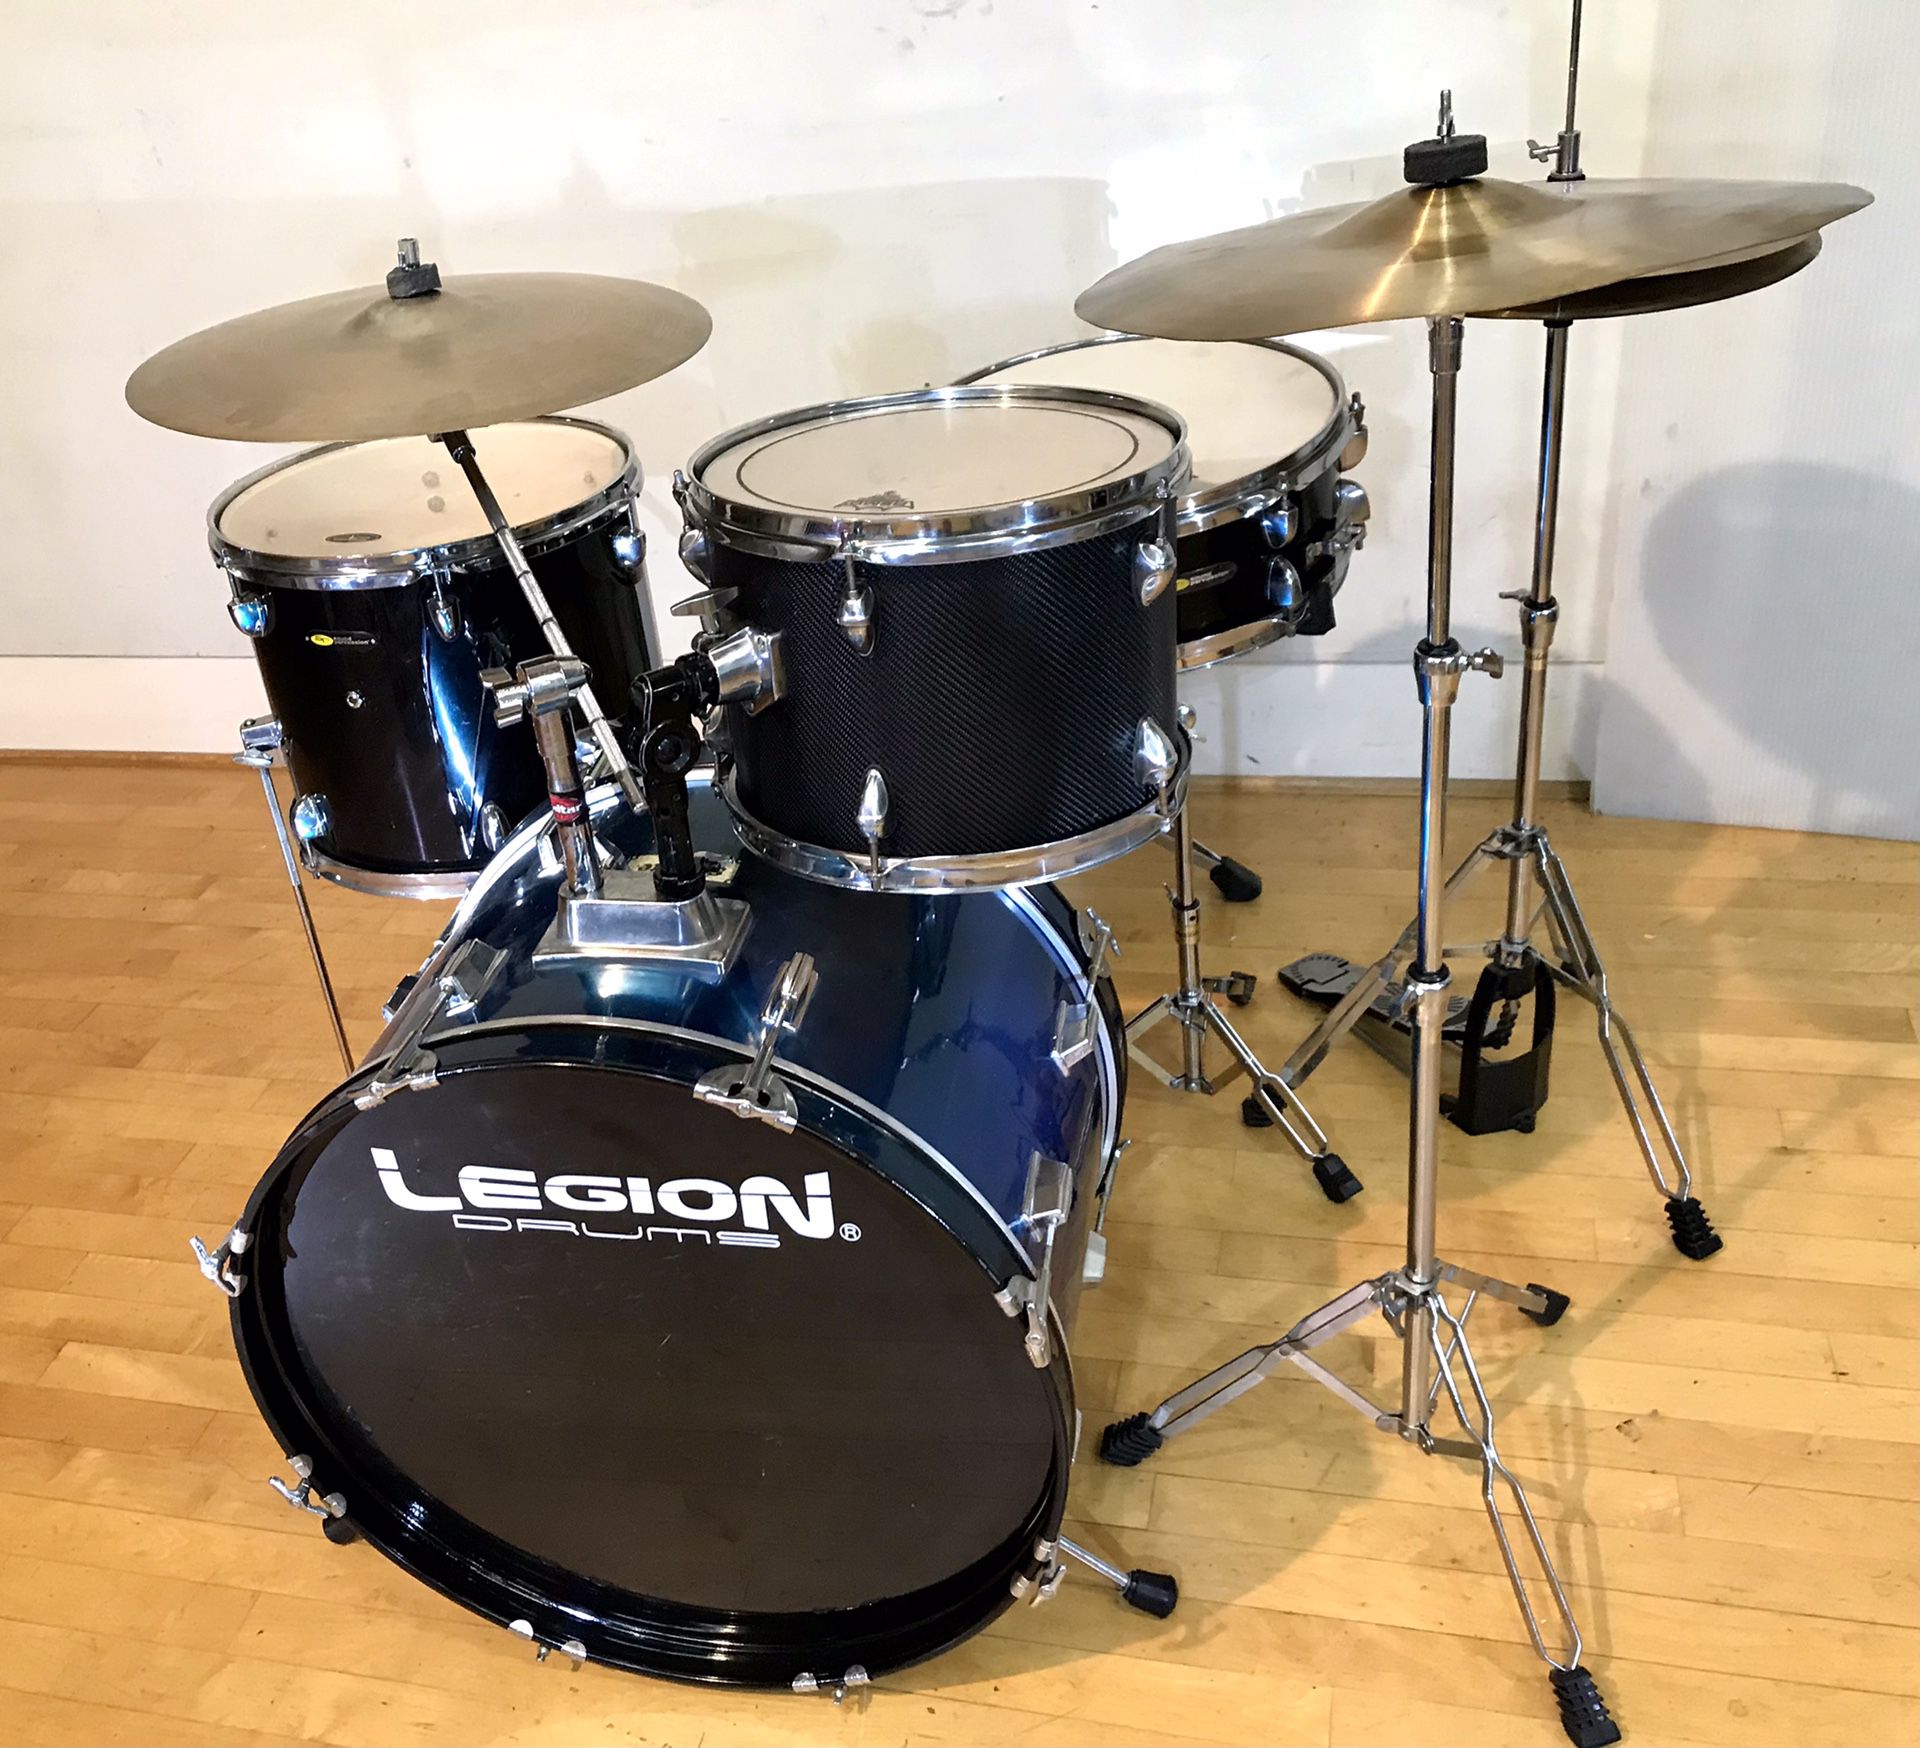 Legend Jazz black & blue drum set cymbals throne stands hihat bass pedal sticks & key $240 in Ontario 91762